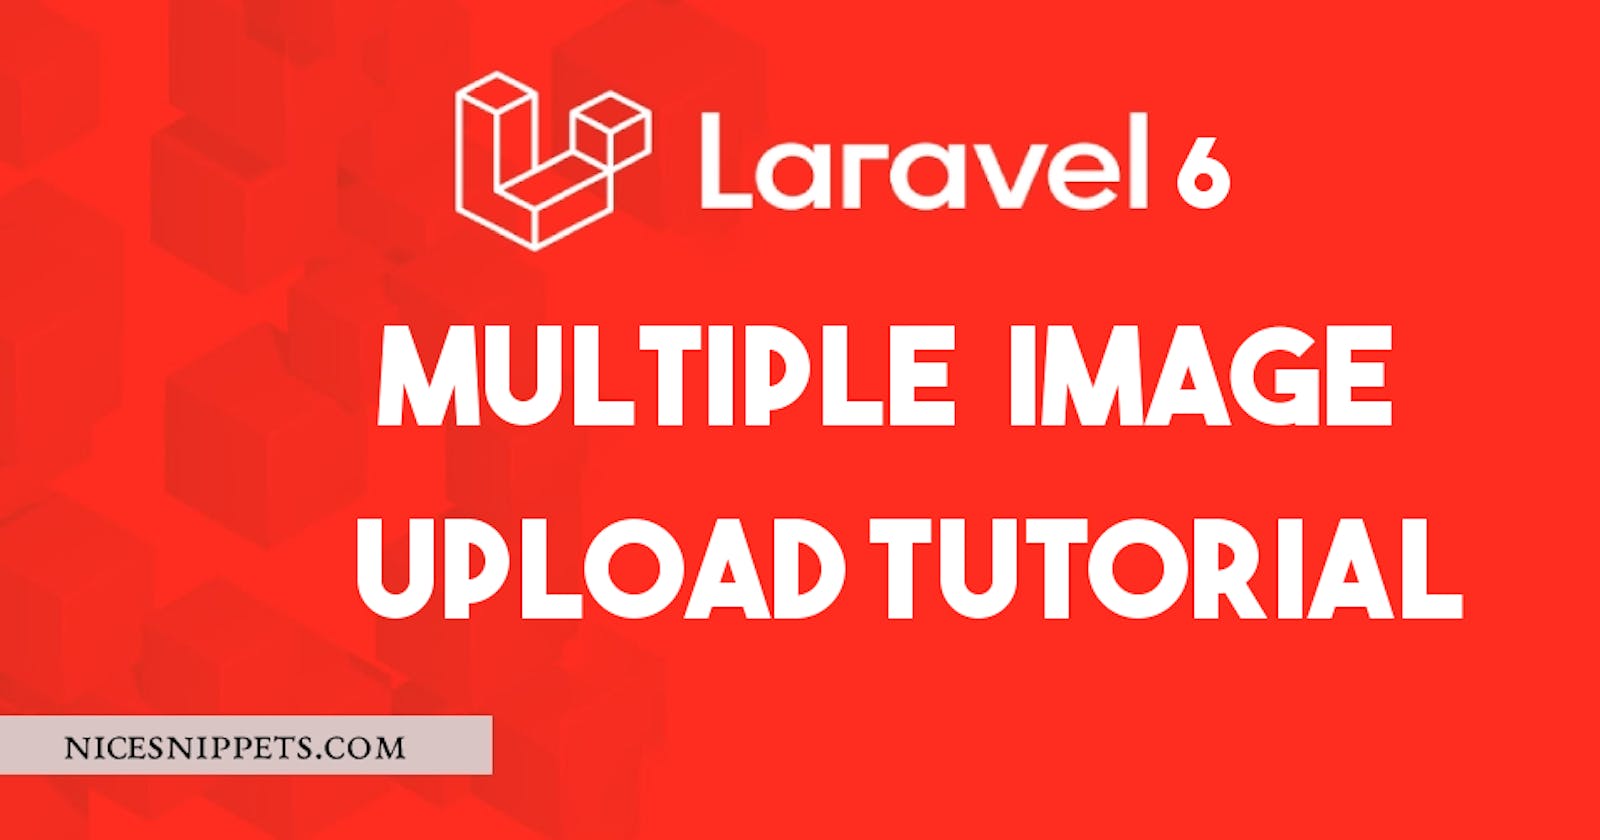 Multiple Image Upload in Laravel 6 Tutorial